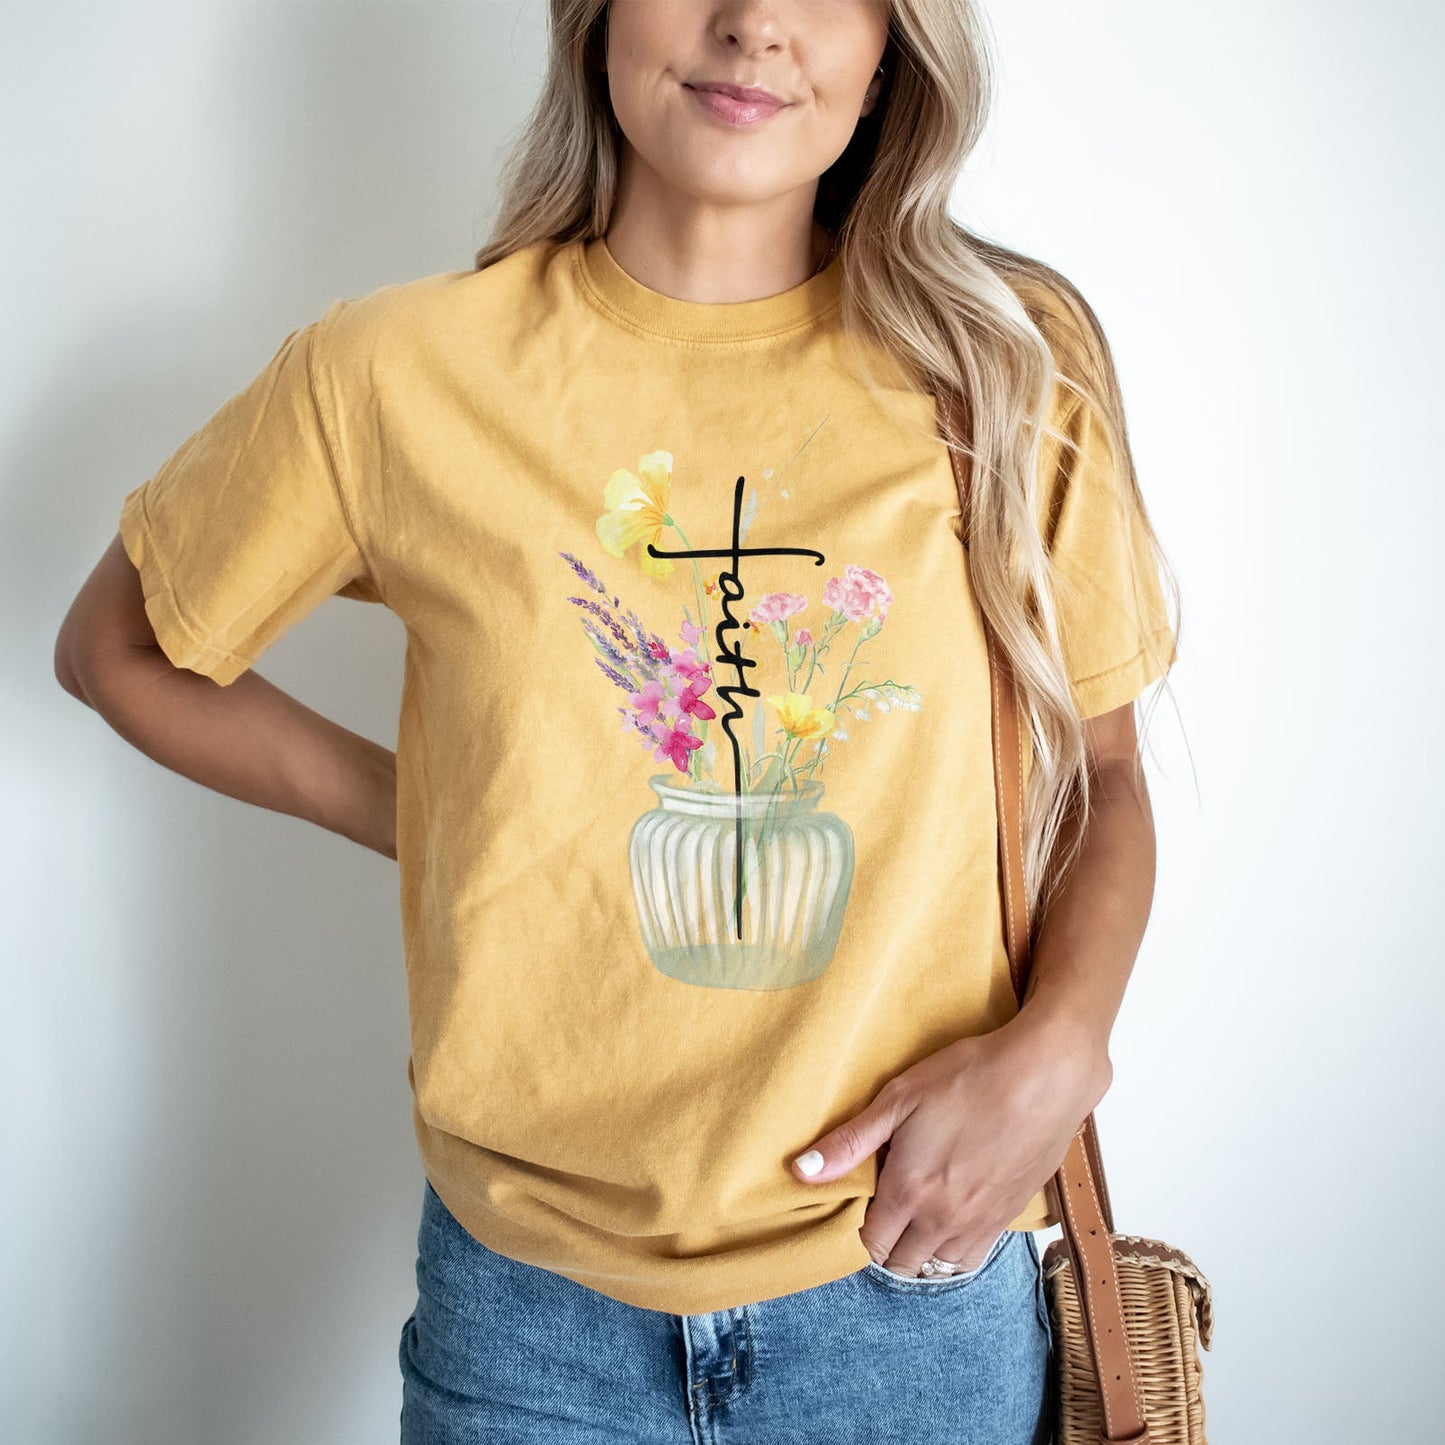 Faith Cross Vase Tee Shirts For Women - Christian Shirts for Women - Religious Tee Shirts